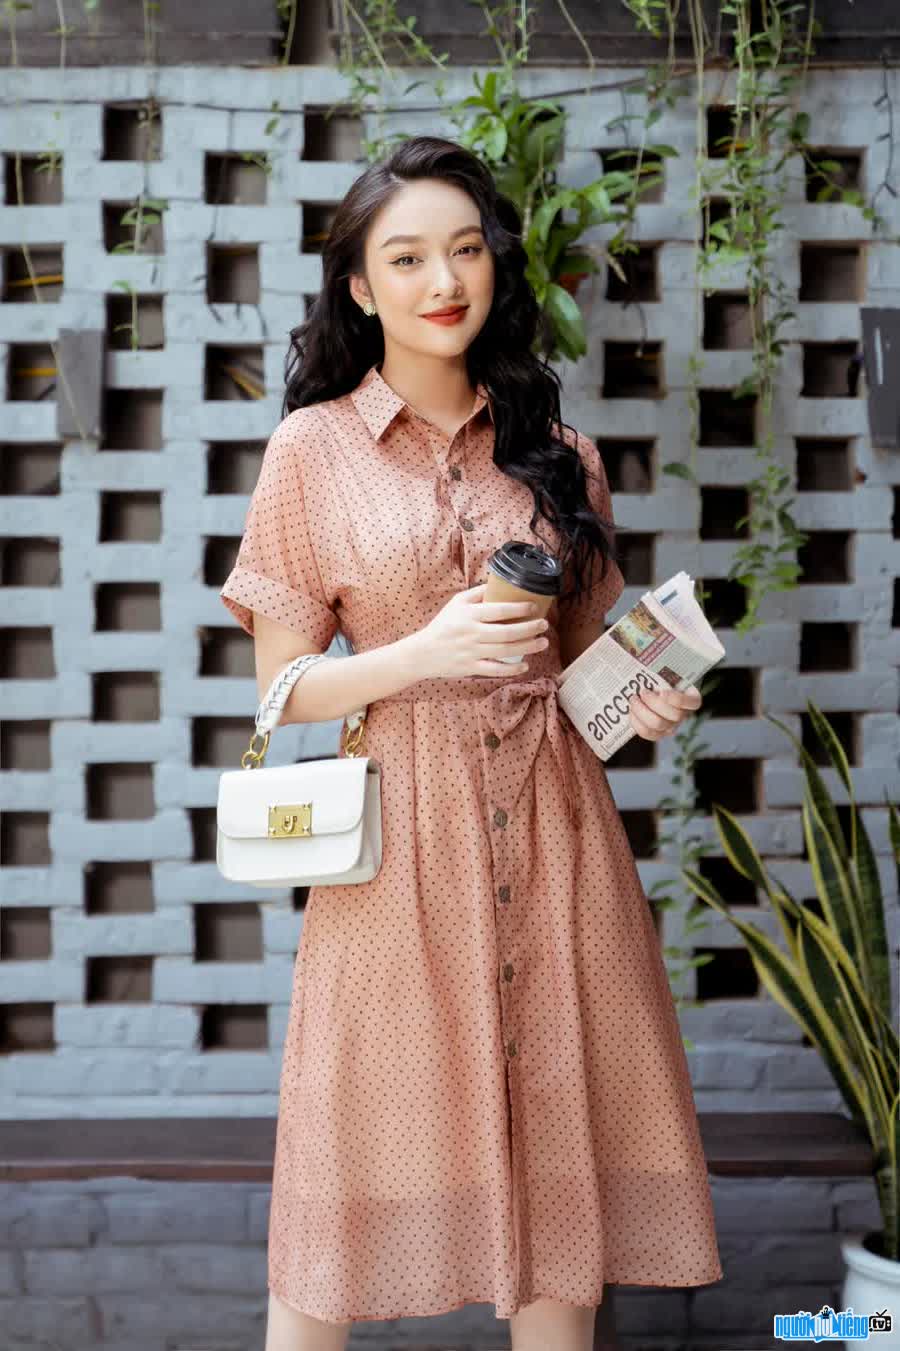 Photo Model Vuong Tu's photo in a fashion photo shoot